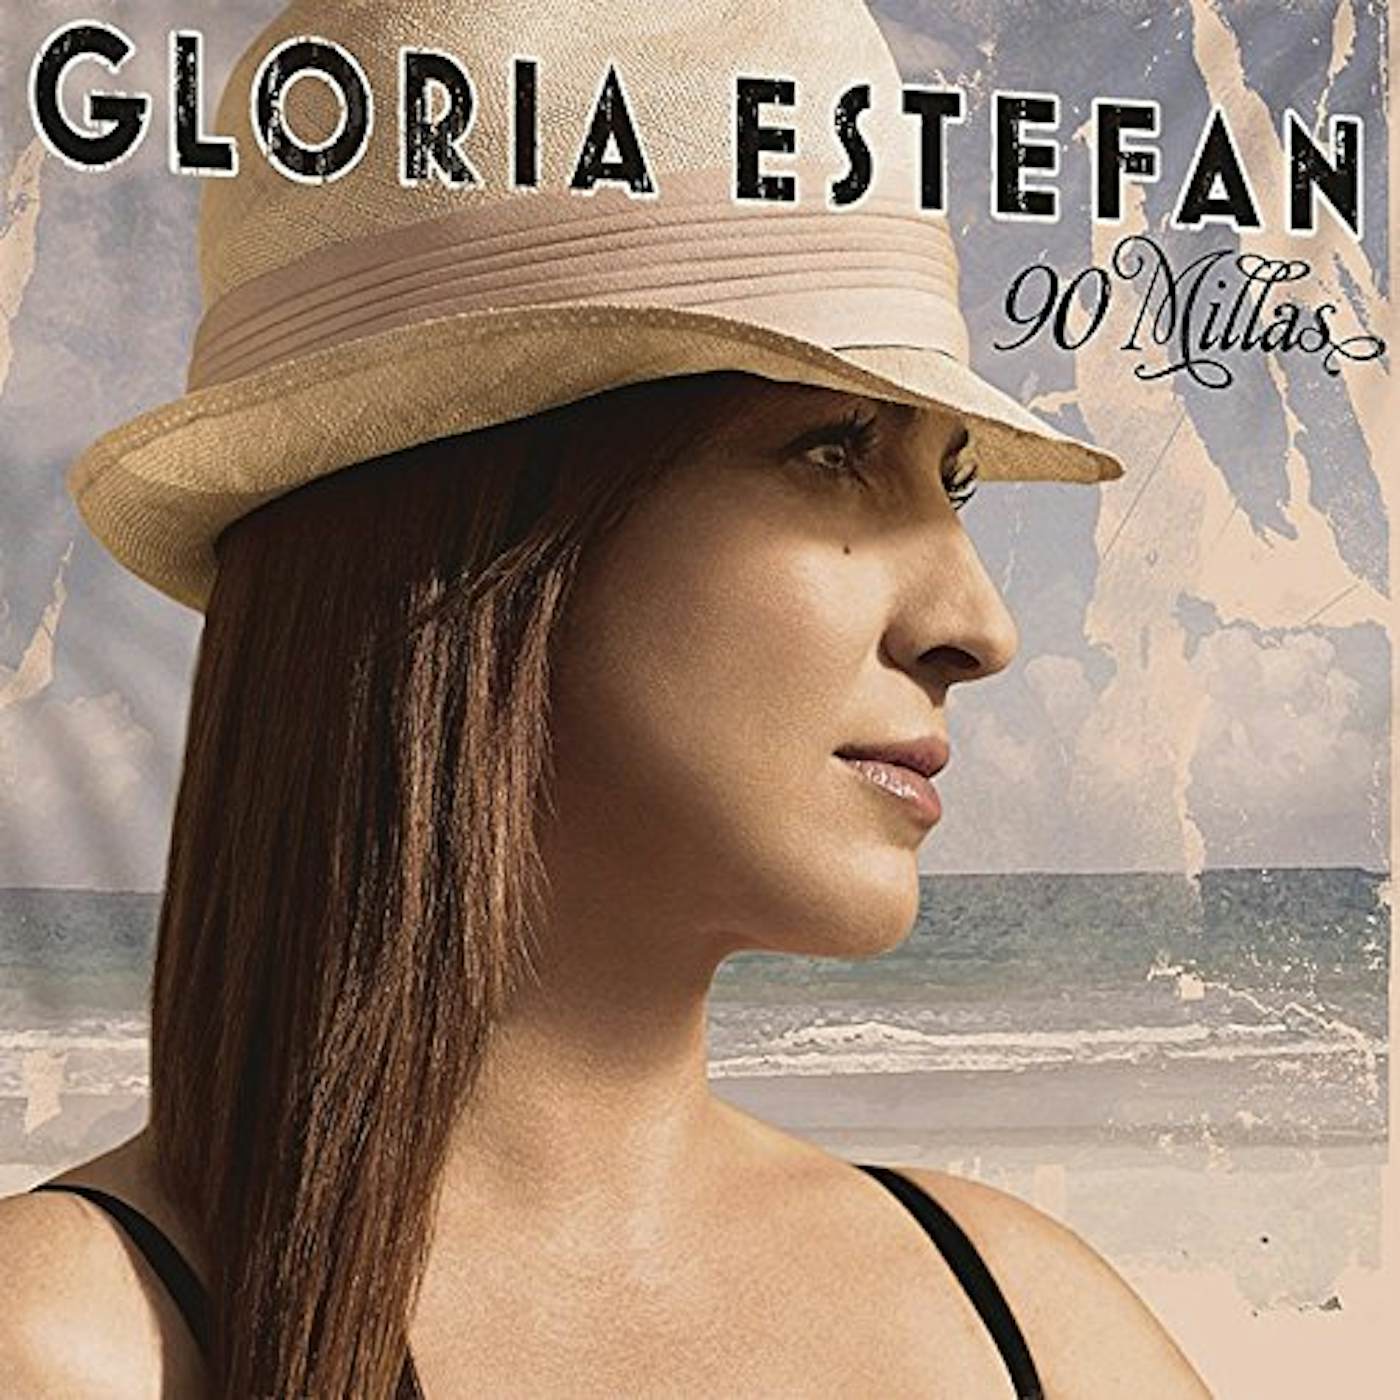 Gloria Estefan 90 MILLAS (24BIT REMASTER/2 BONUS TRACKS) CD